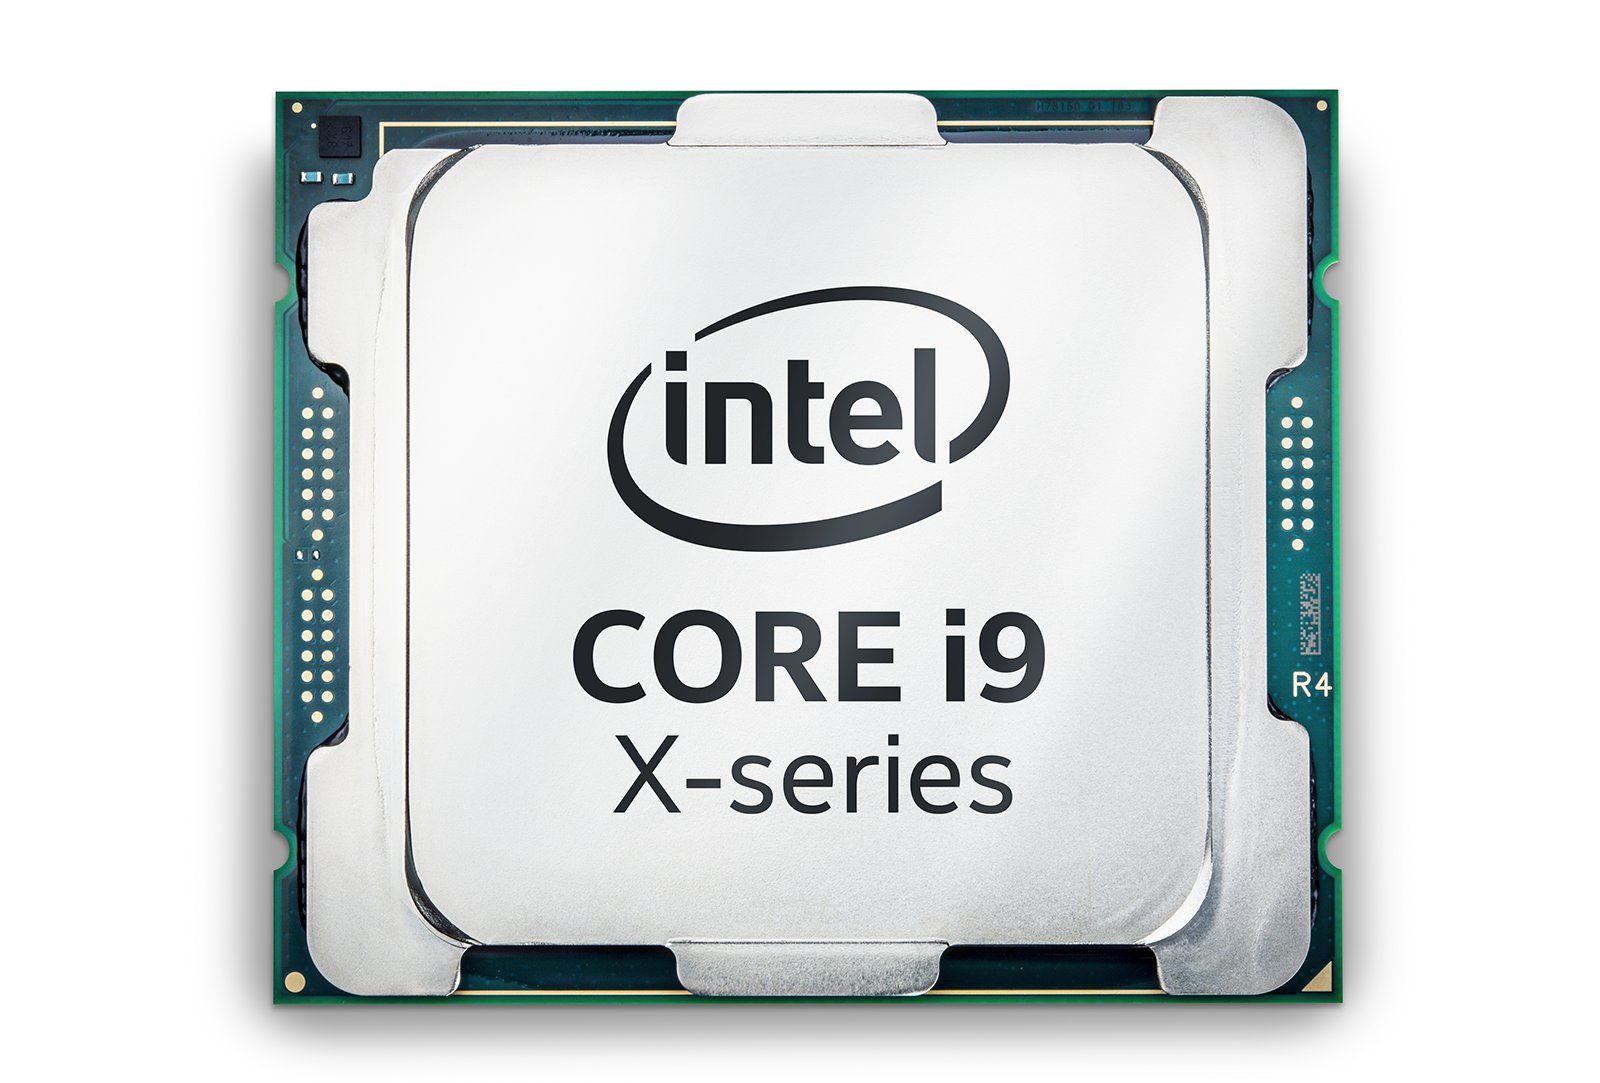 Intel+Core+i9+x+series.jpg